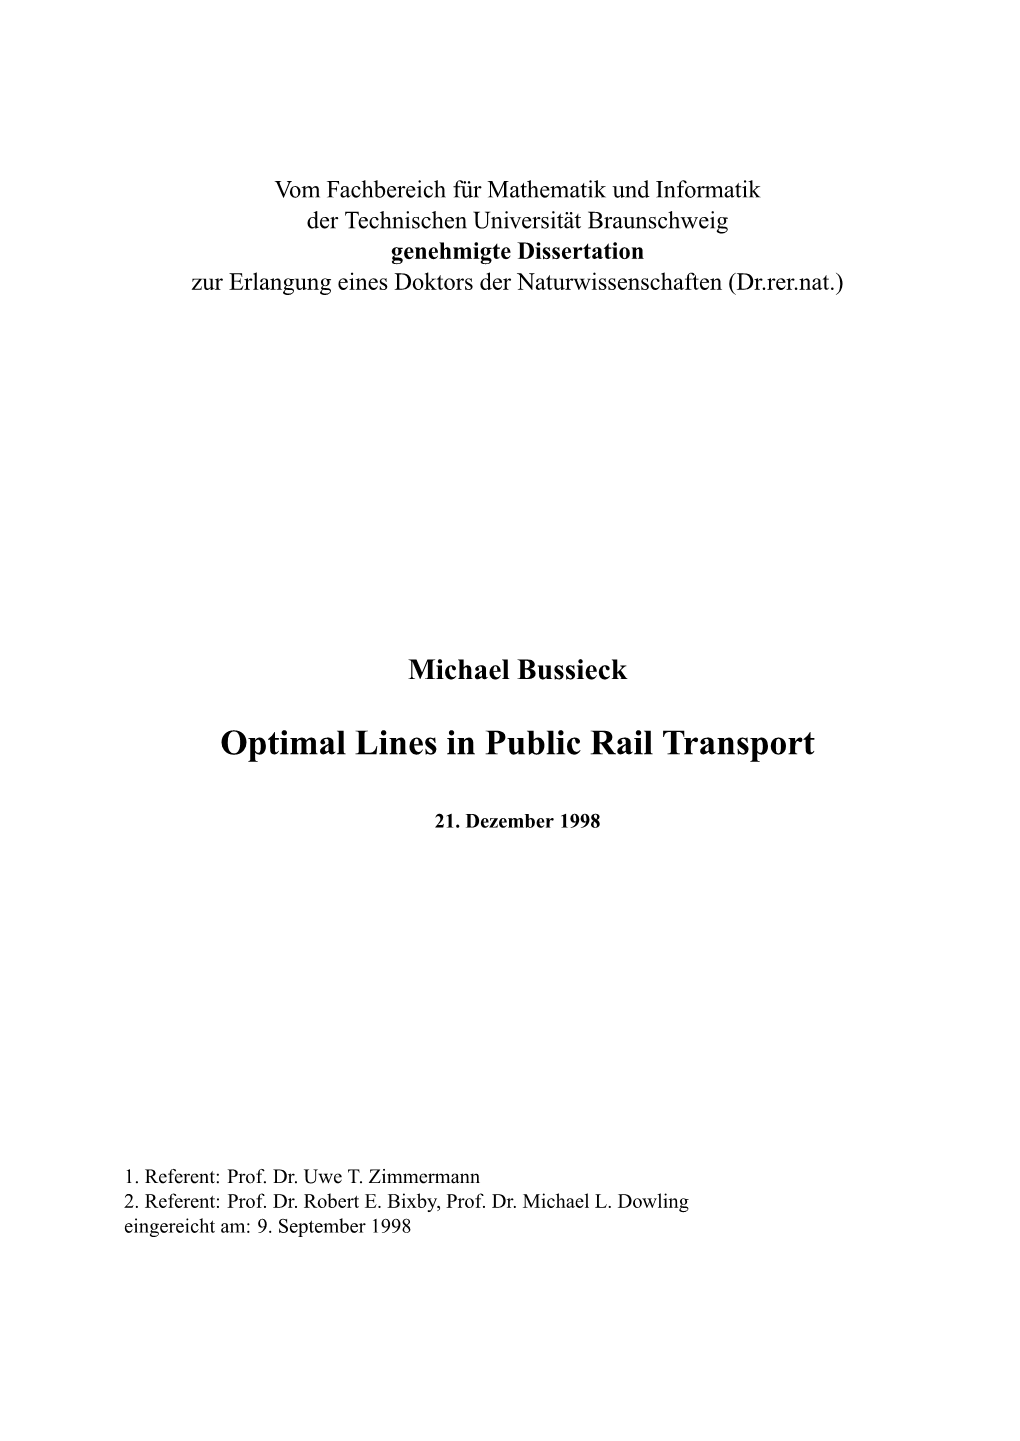 Optimal Lines in Public Rail Transport